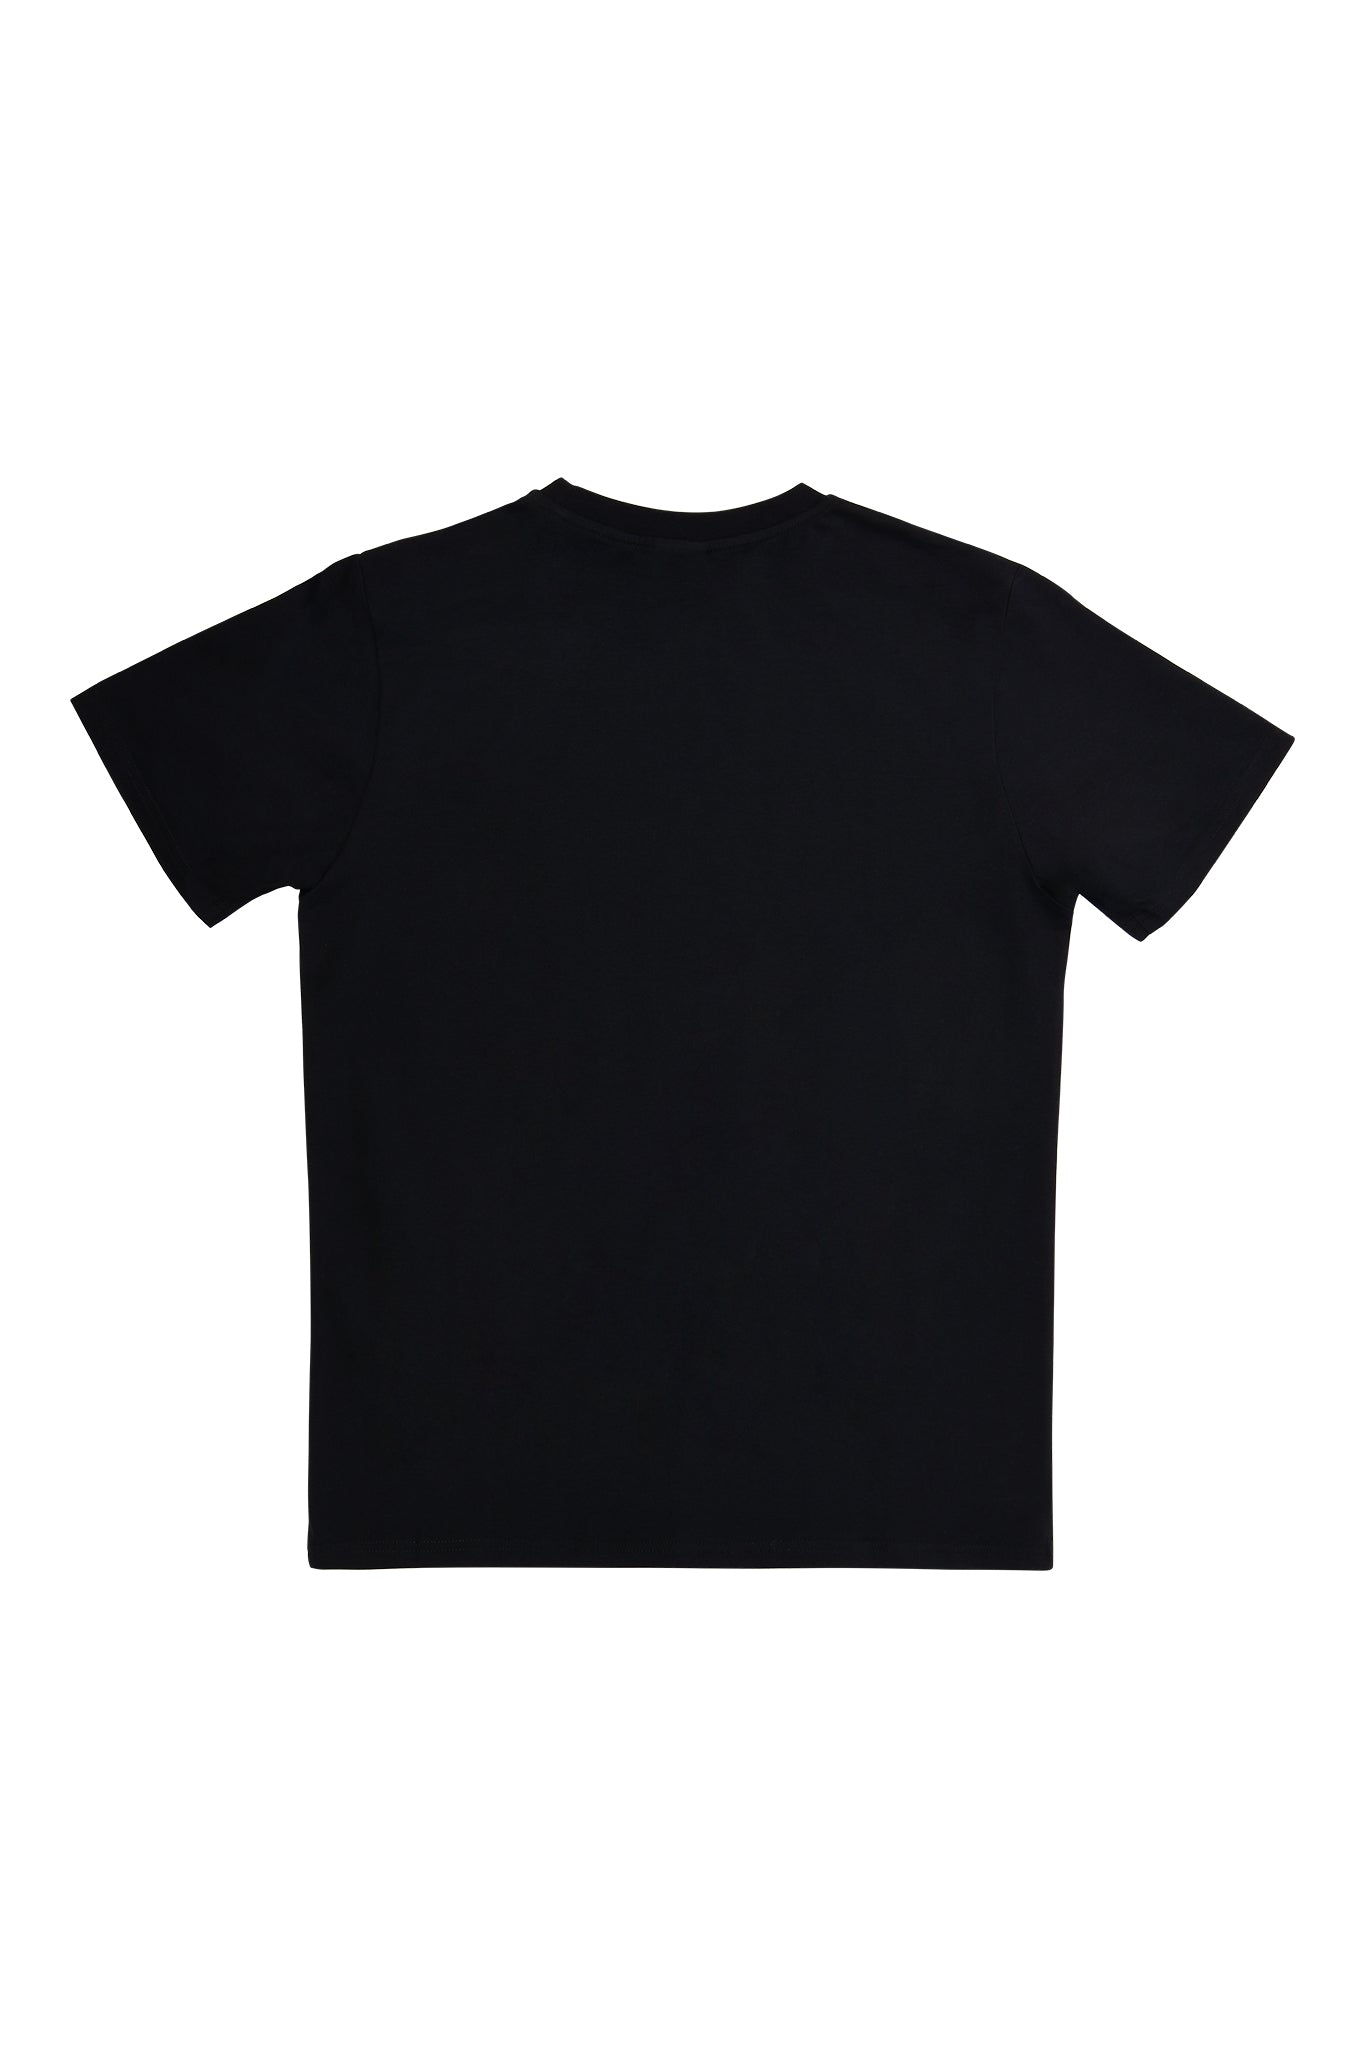 NEVA STOP Rhinstone T-Shirt Black